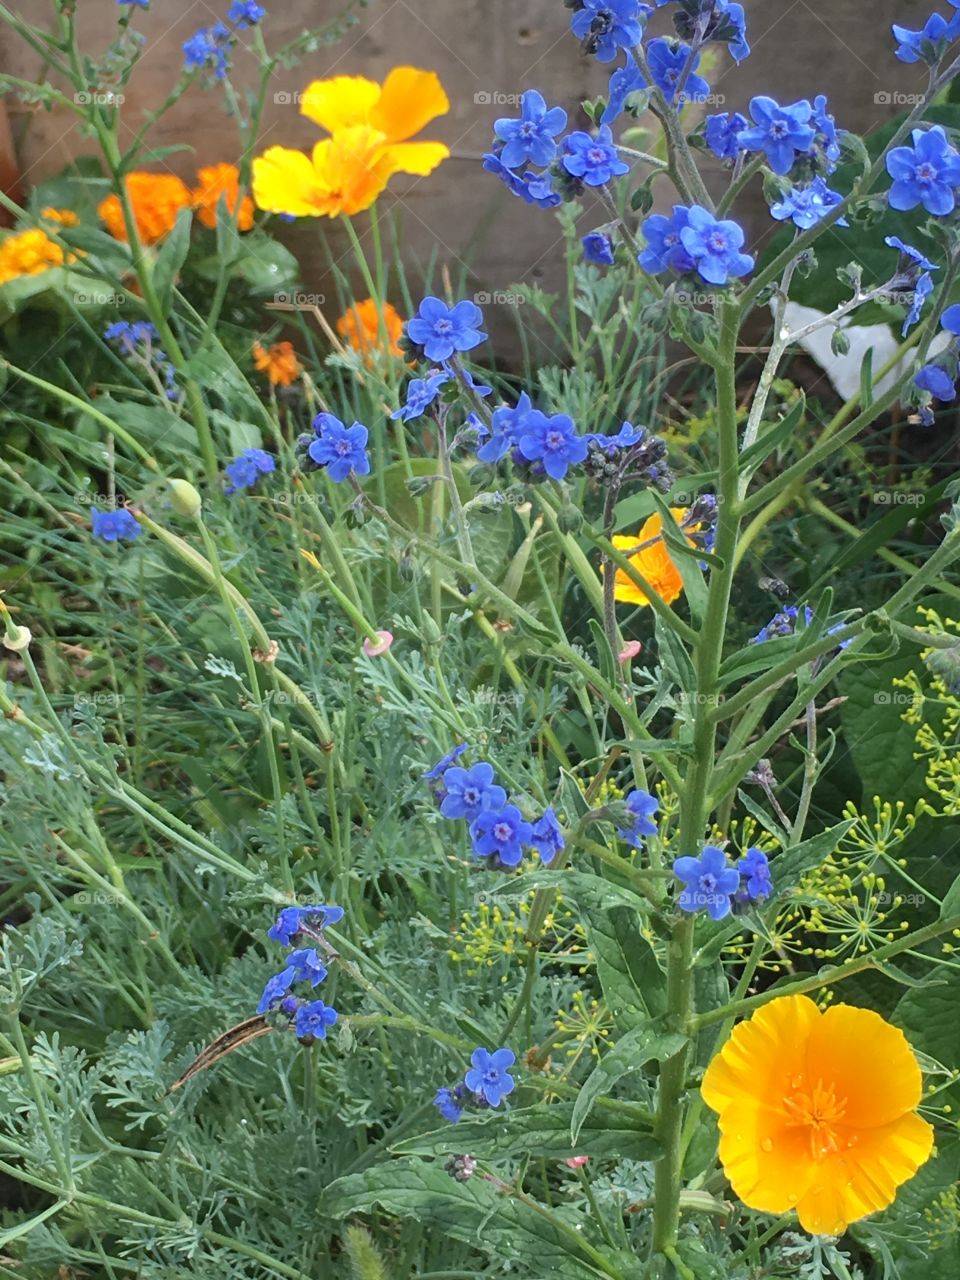 Flowers from my garden